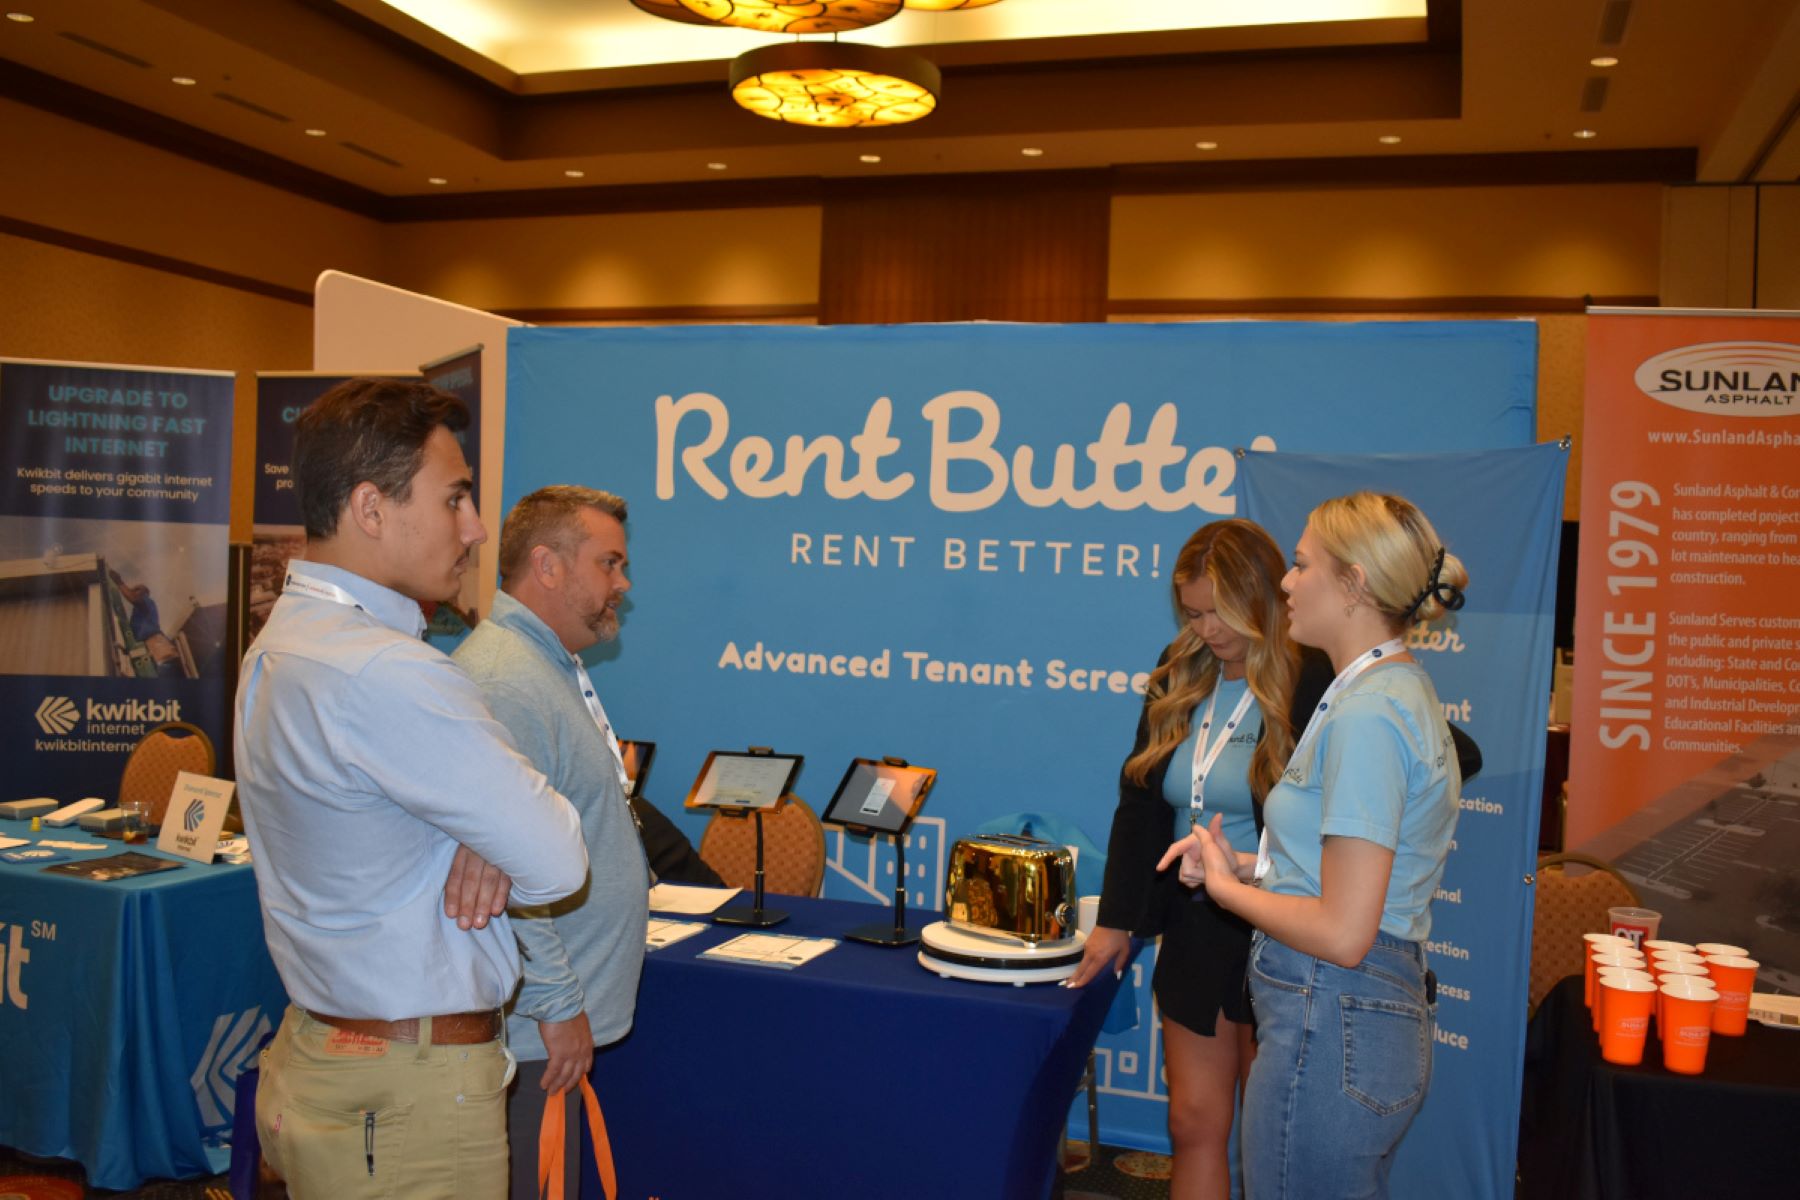 rent-butter-improving-rental-application-process-beyond-credit-scores